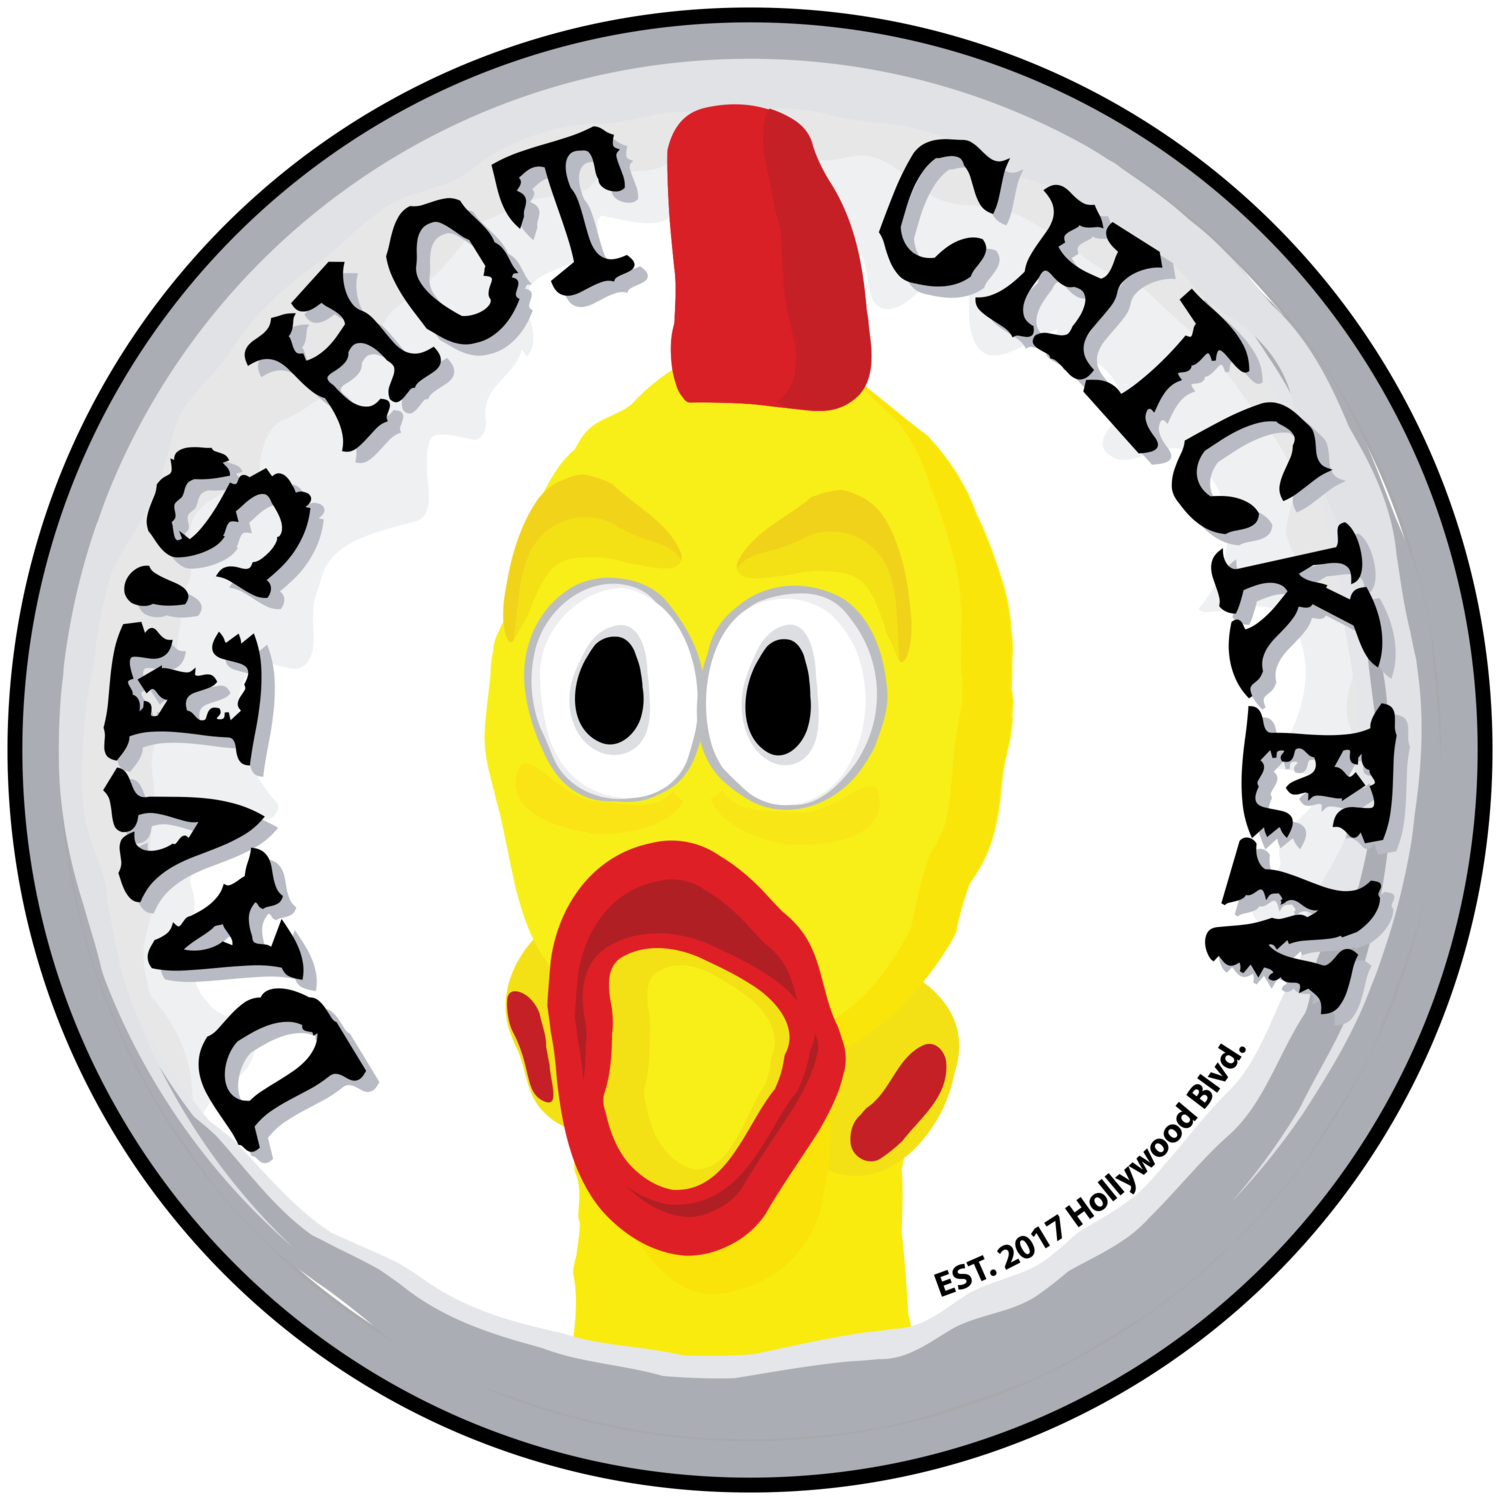 Daves+Hot+Chicken+LOGO+2019